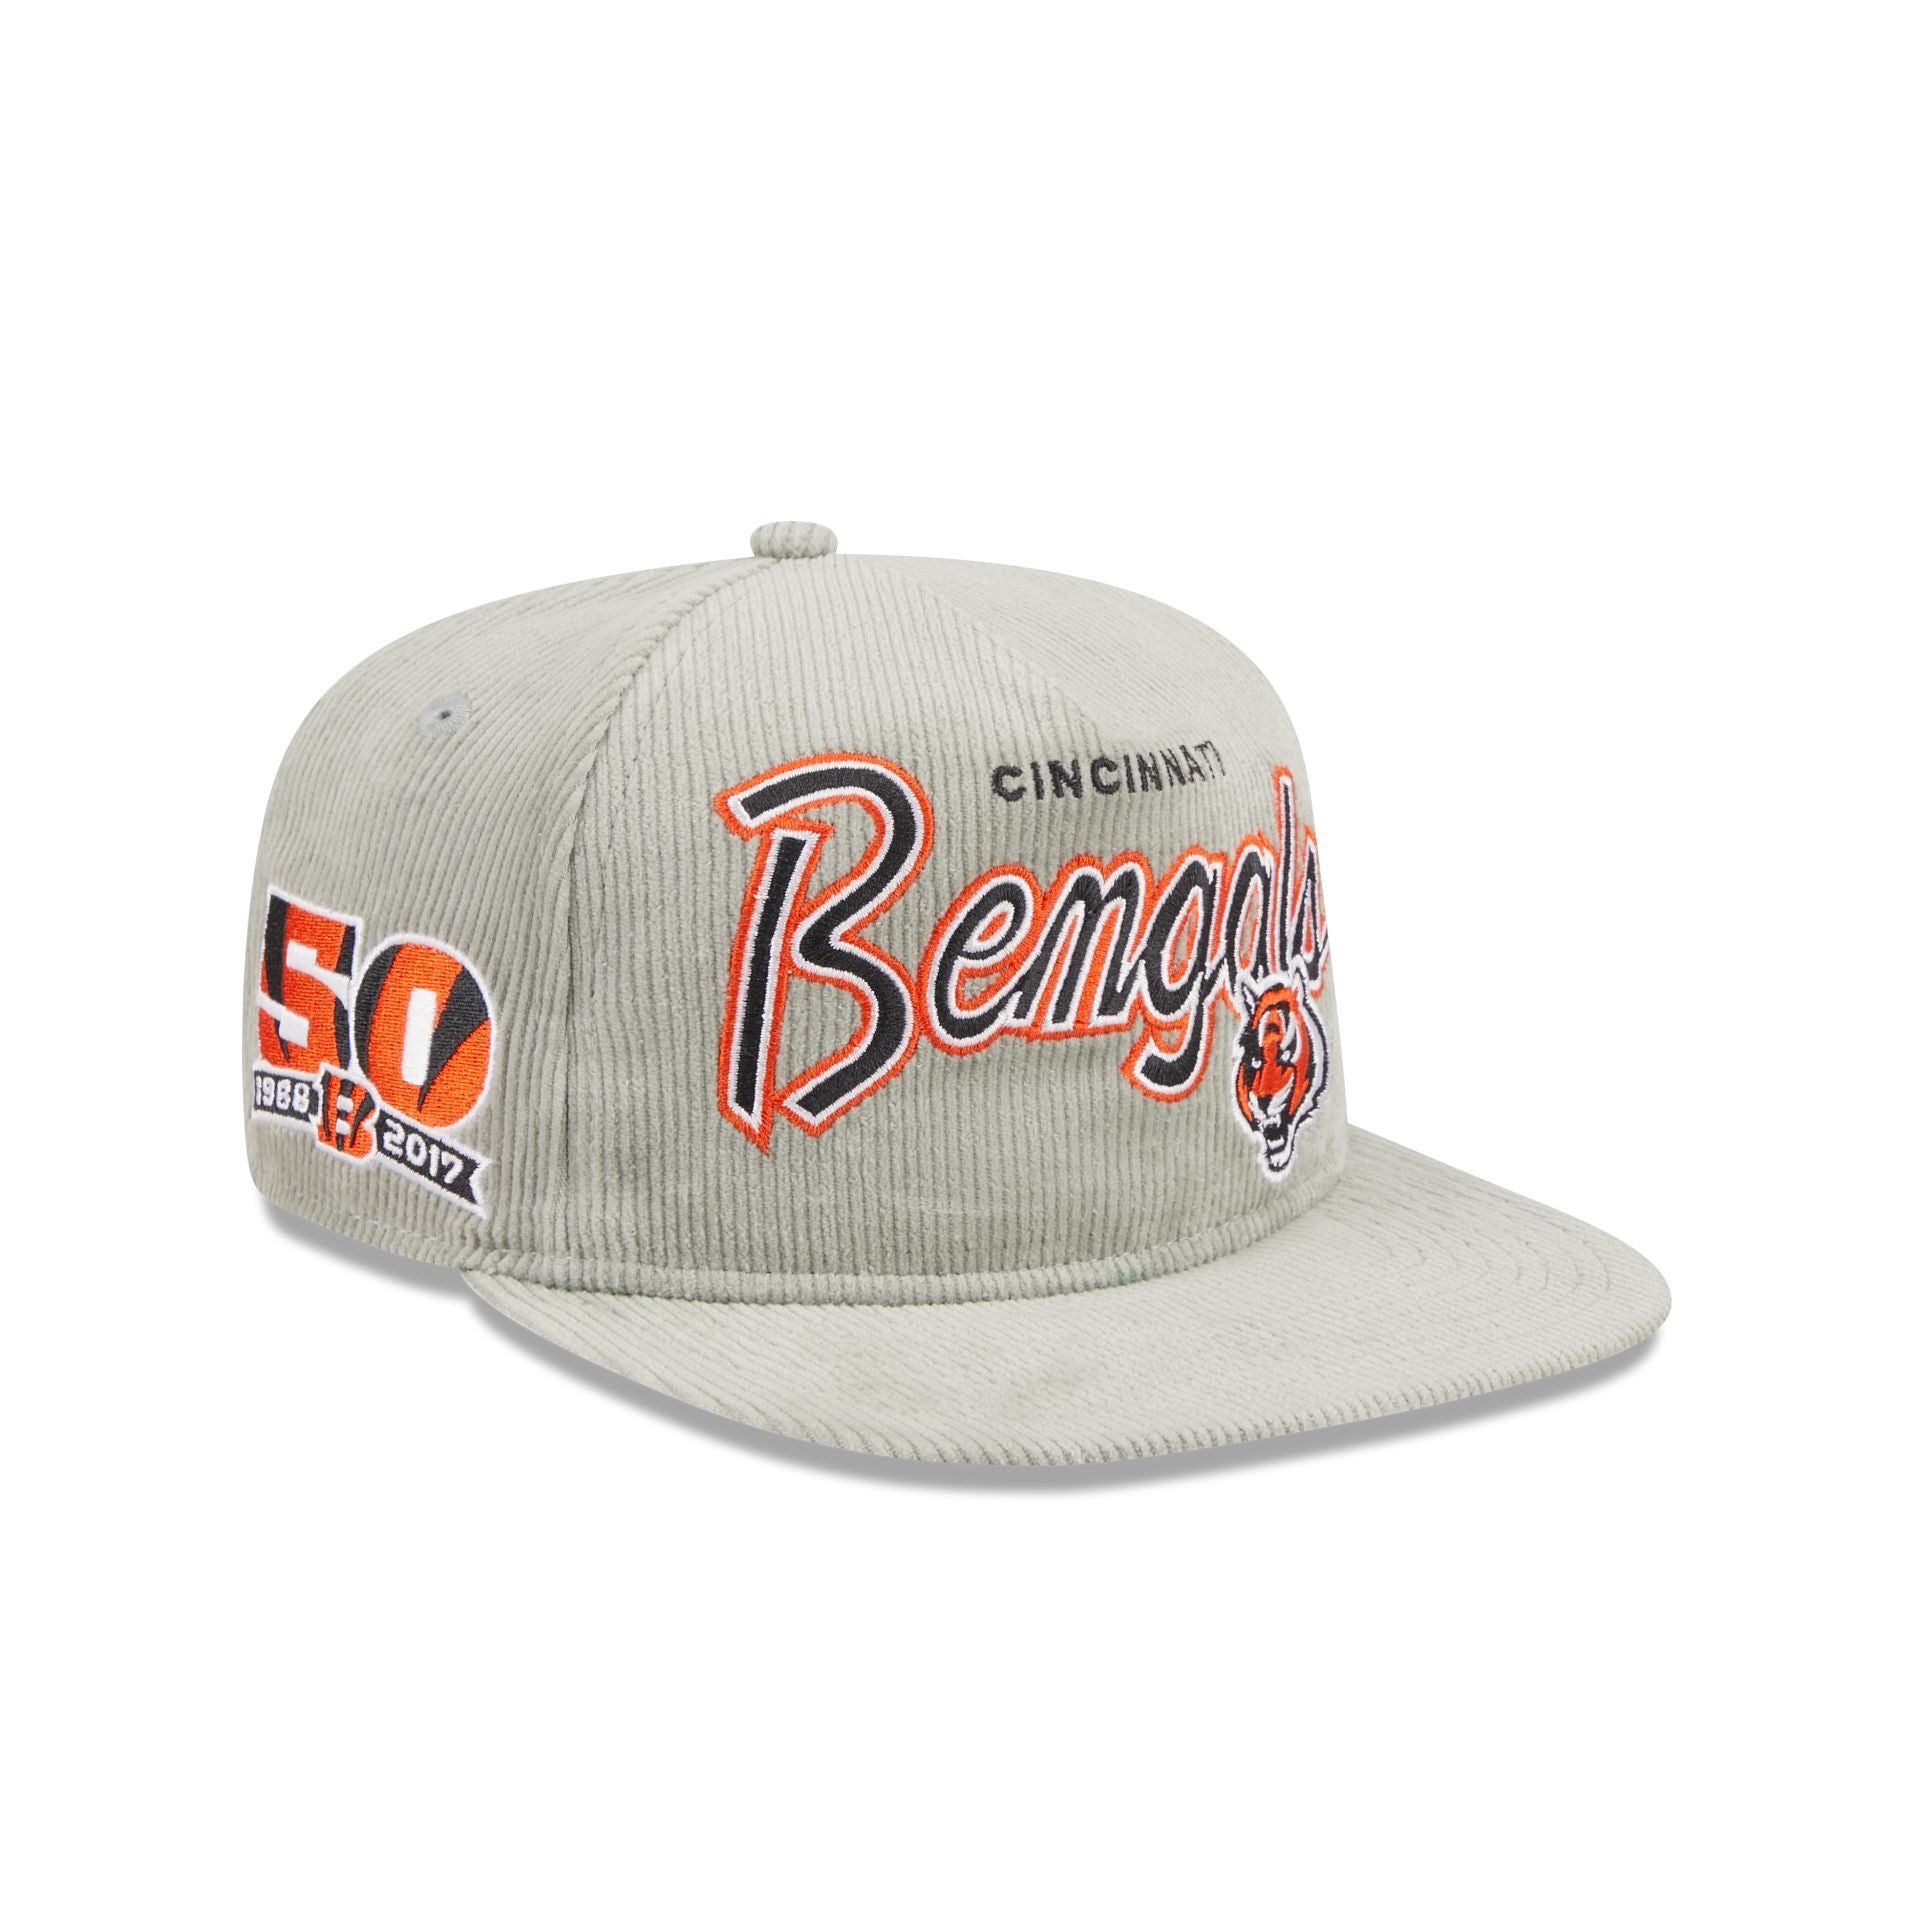 Cincinnati Bengals Throwback Golfer Hat, Gray, by New Era